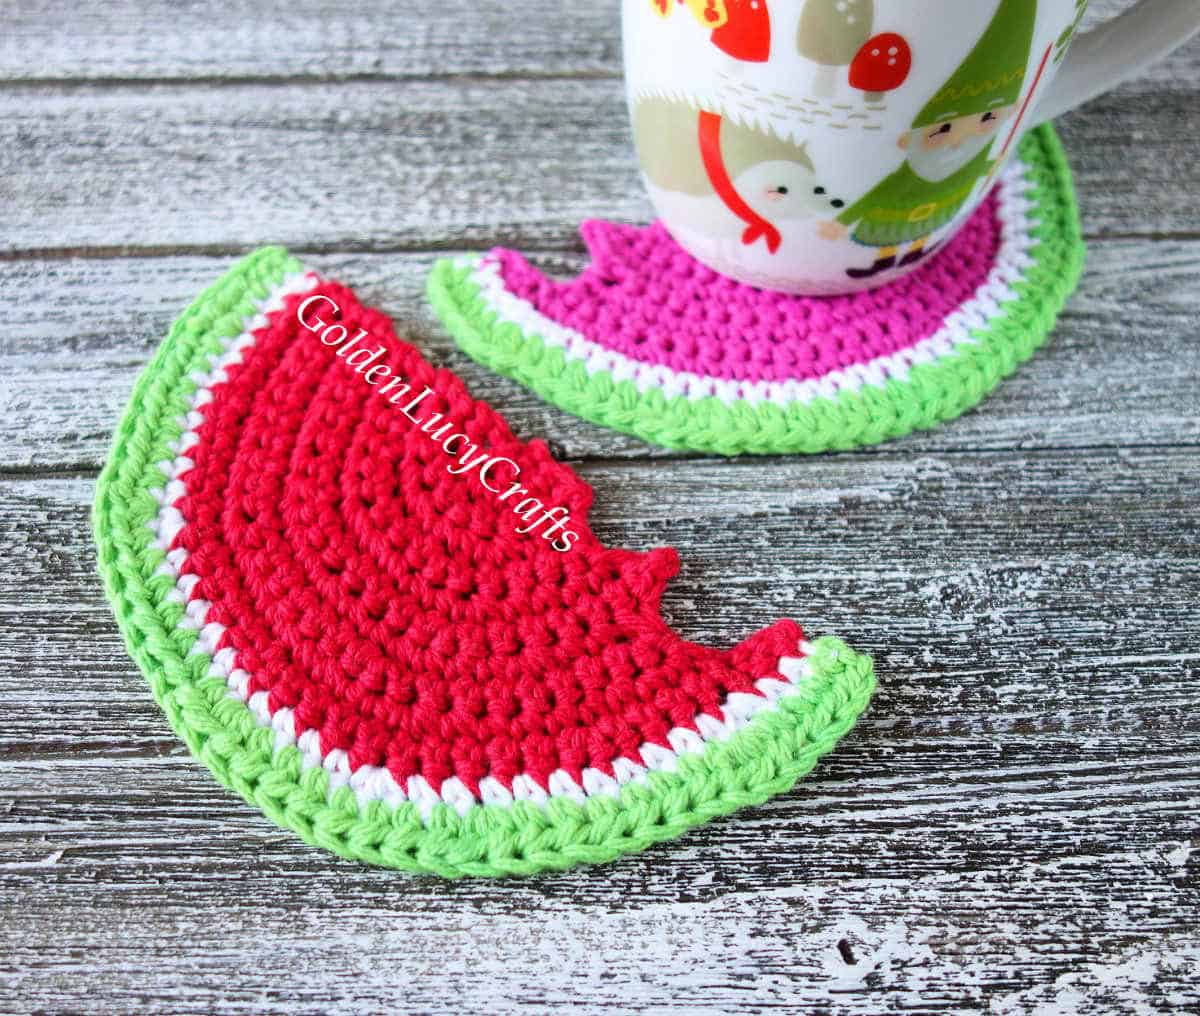 Crochet watermelon coasters.